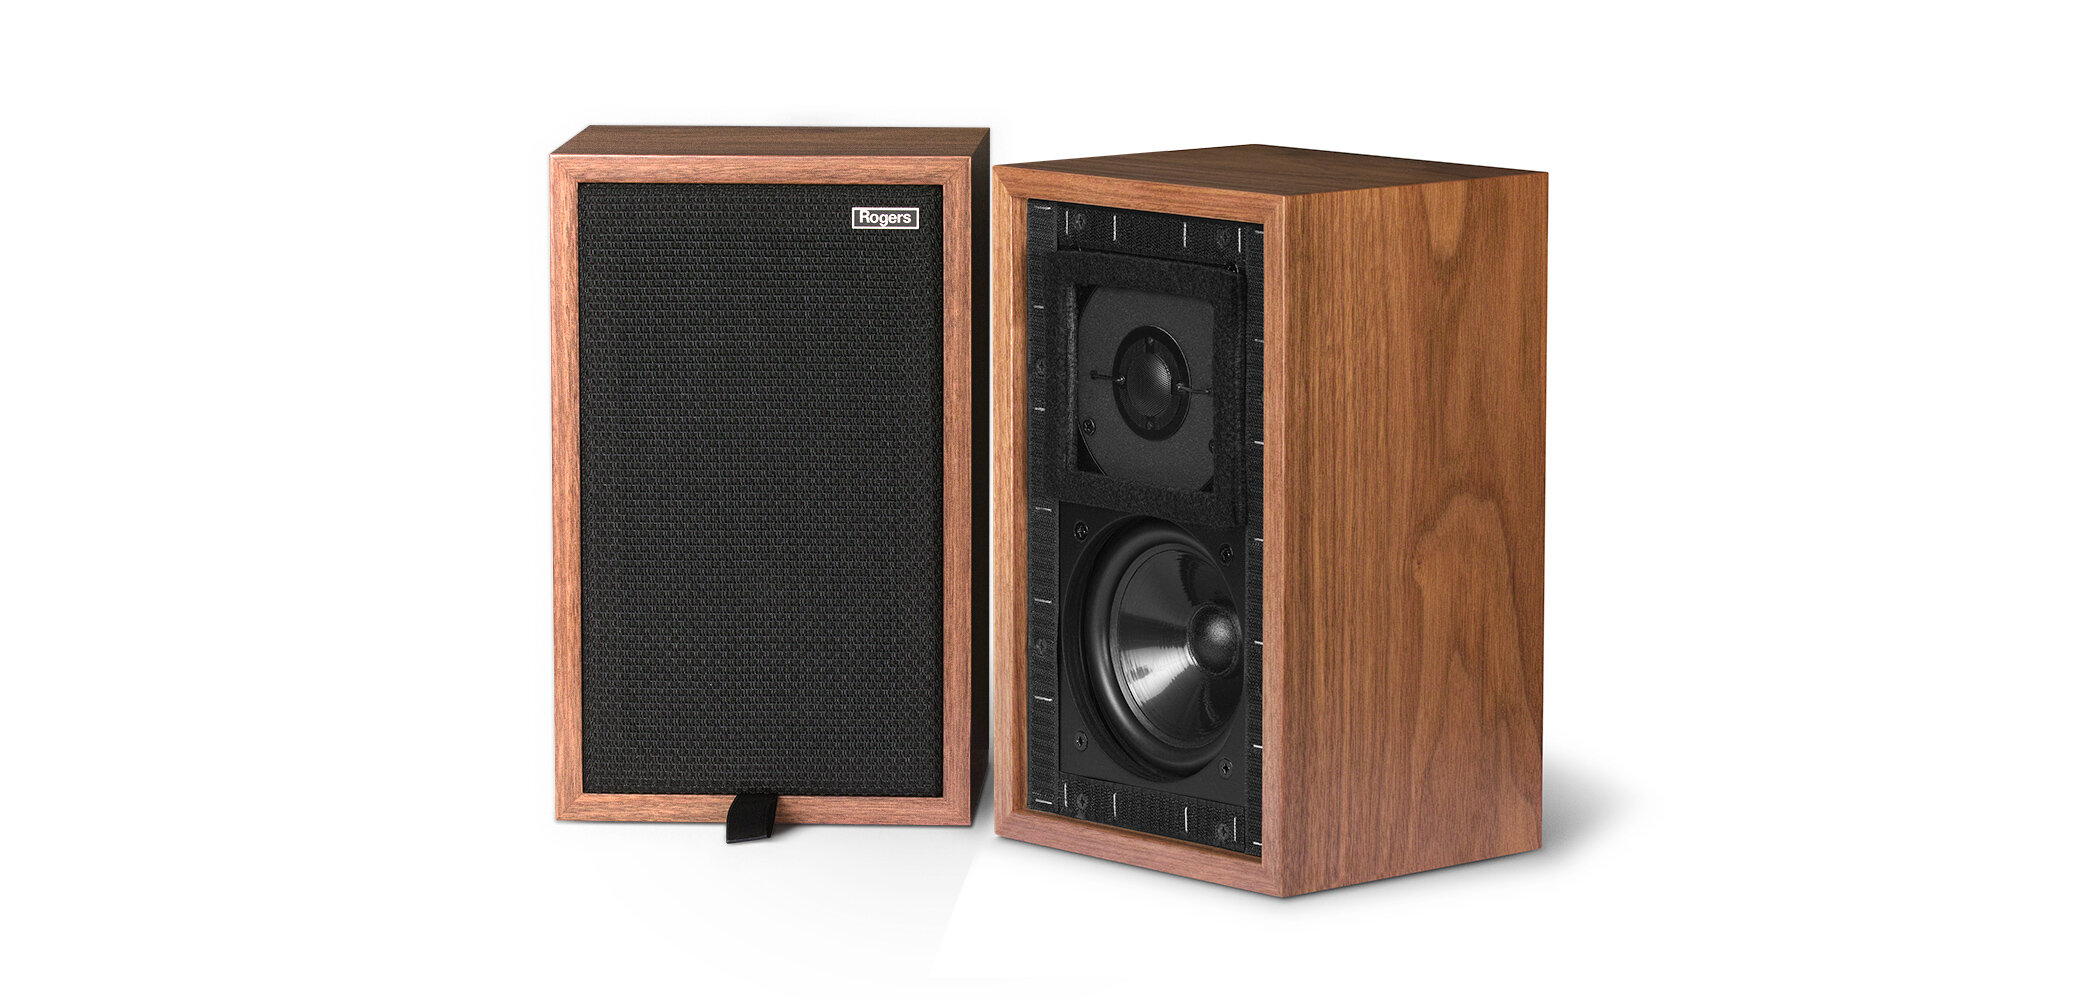 Rogers-LS3_5a-speakers-GL004.jpg